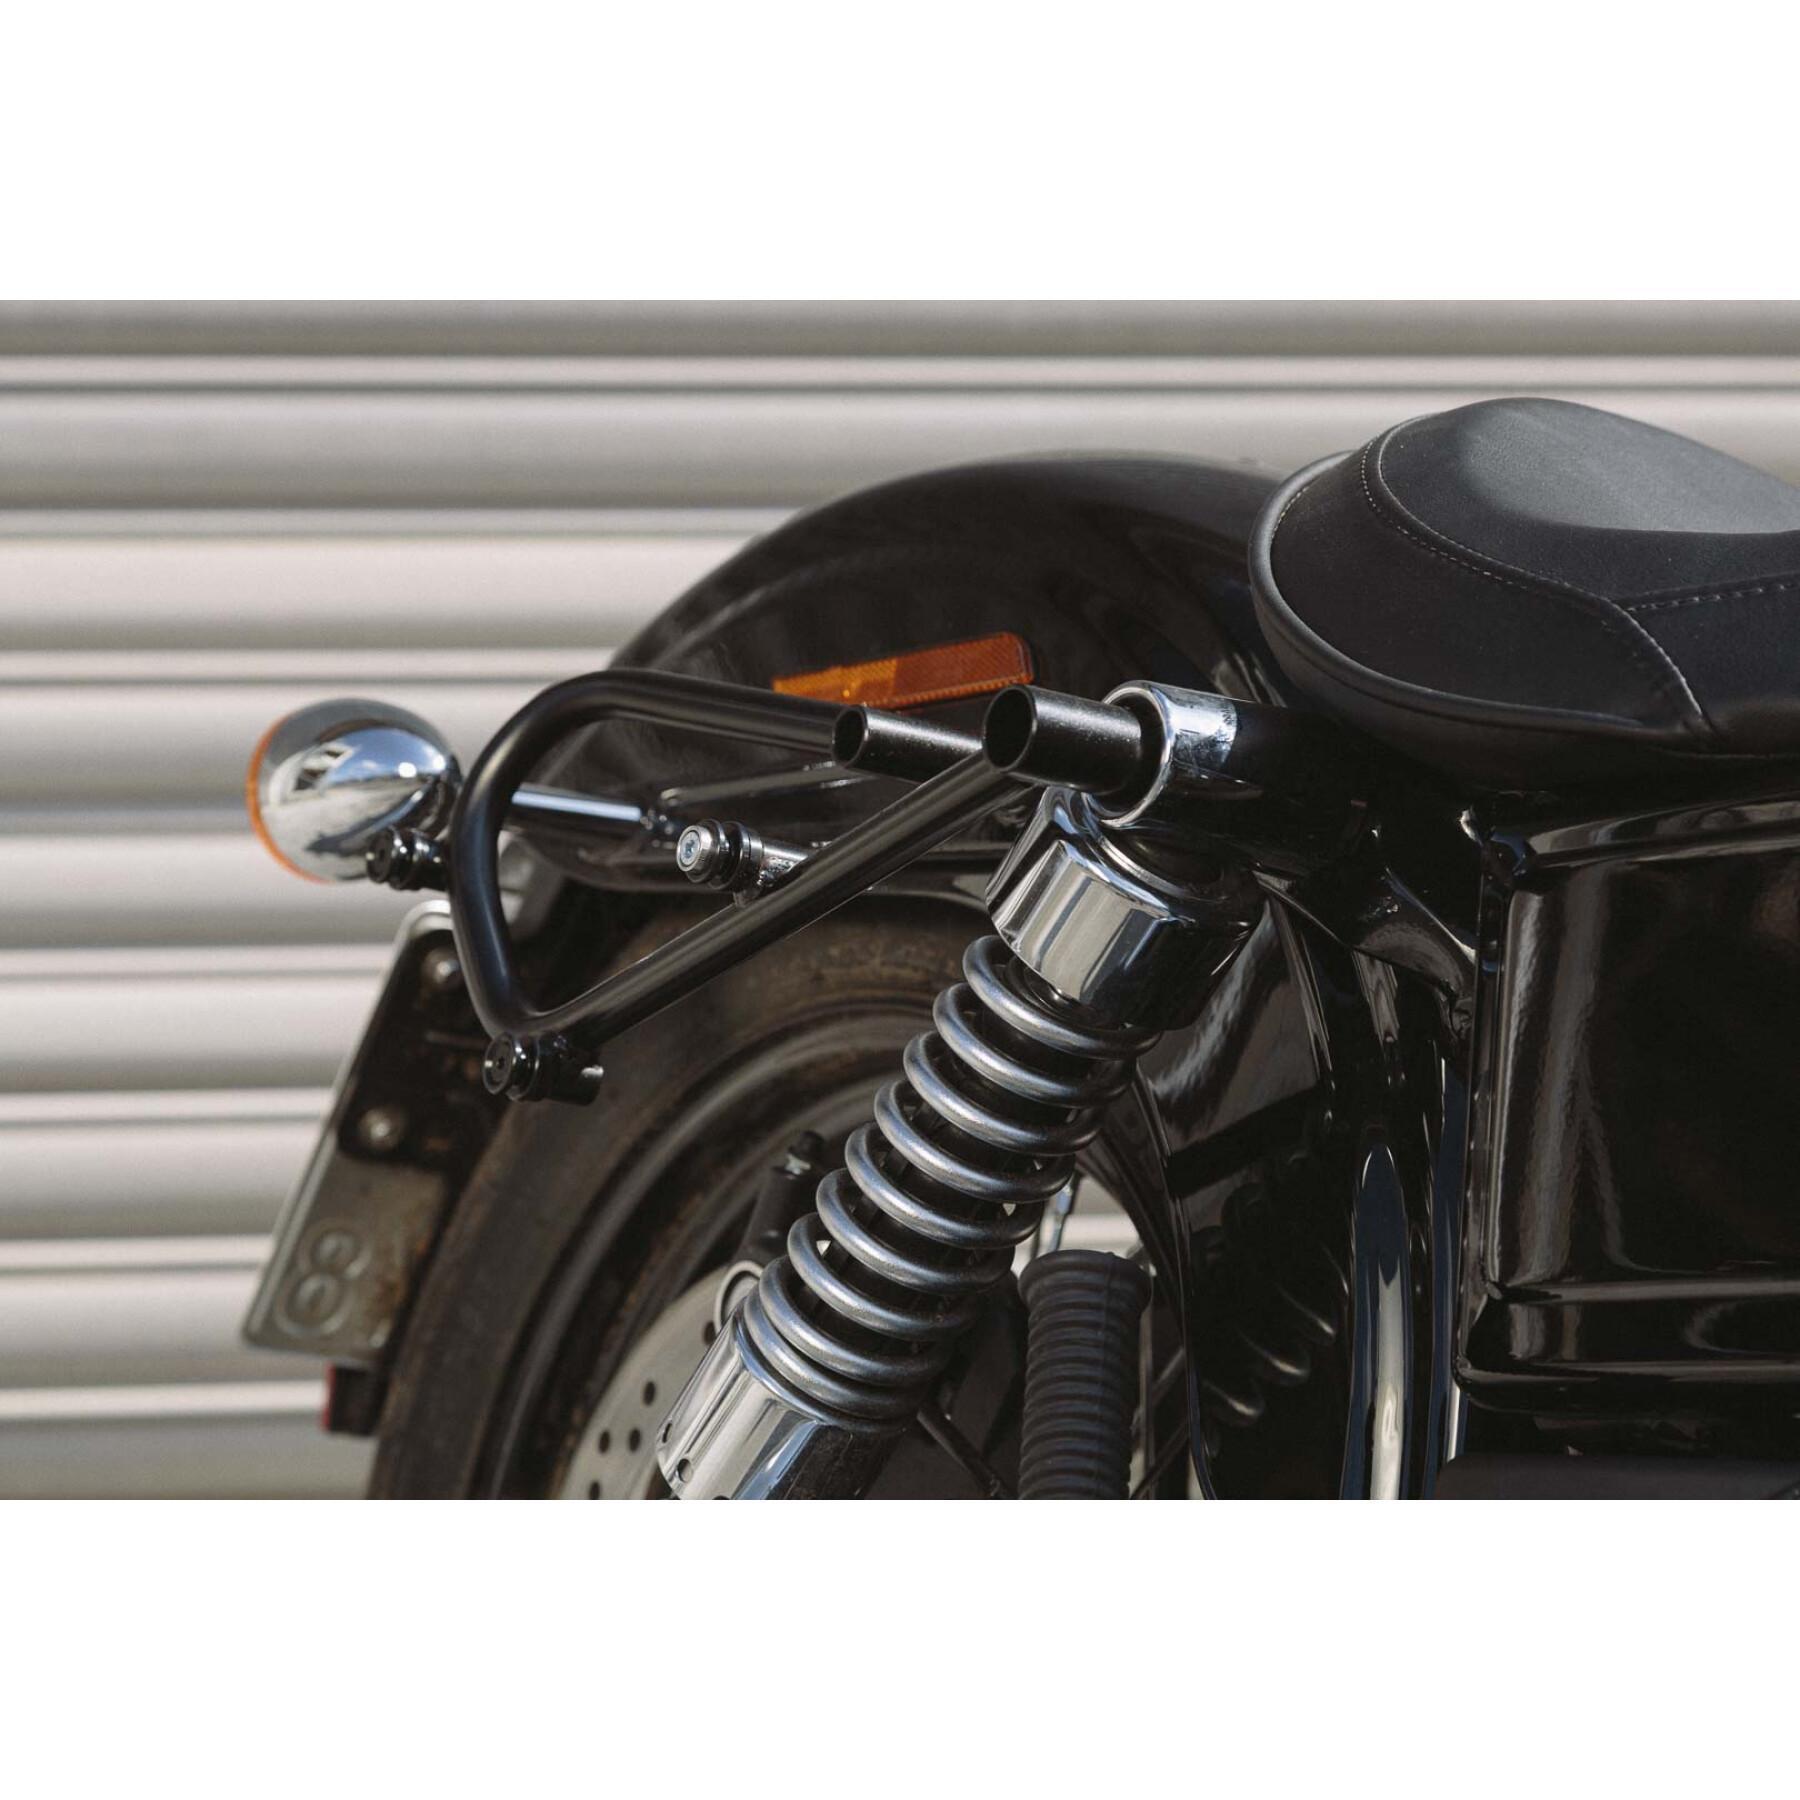 Porta borse laterali per moto slc SW-Motech Harley Dyna modèles (09-17).